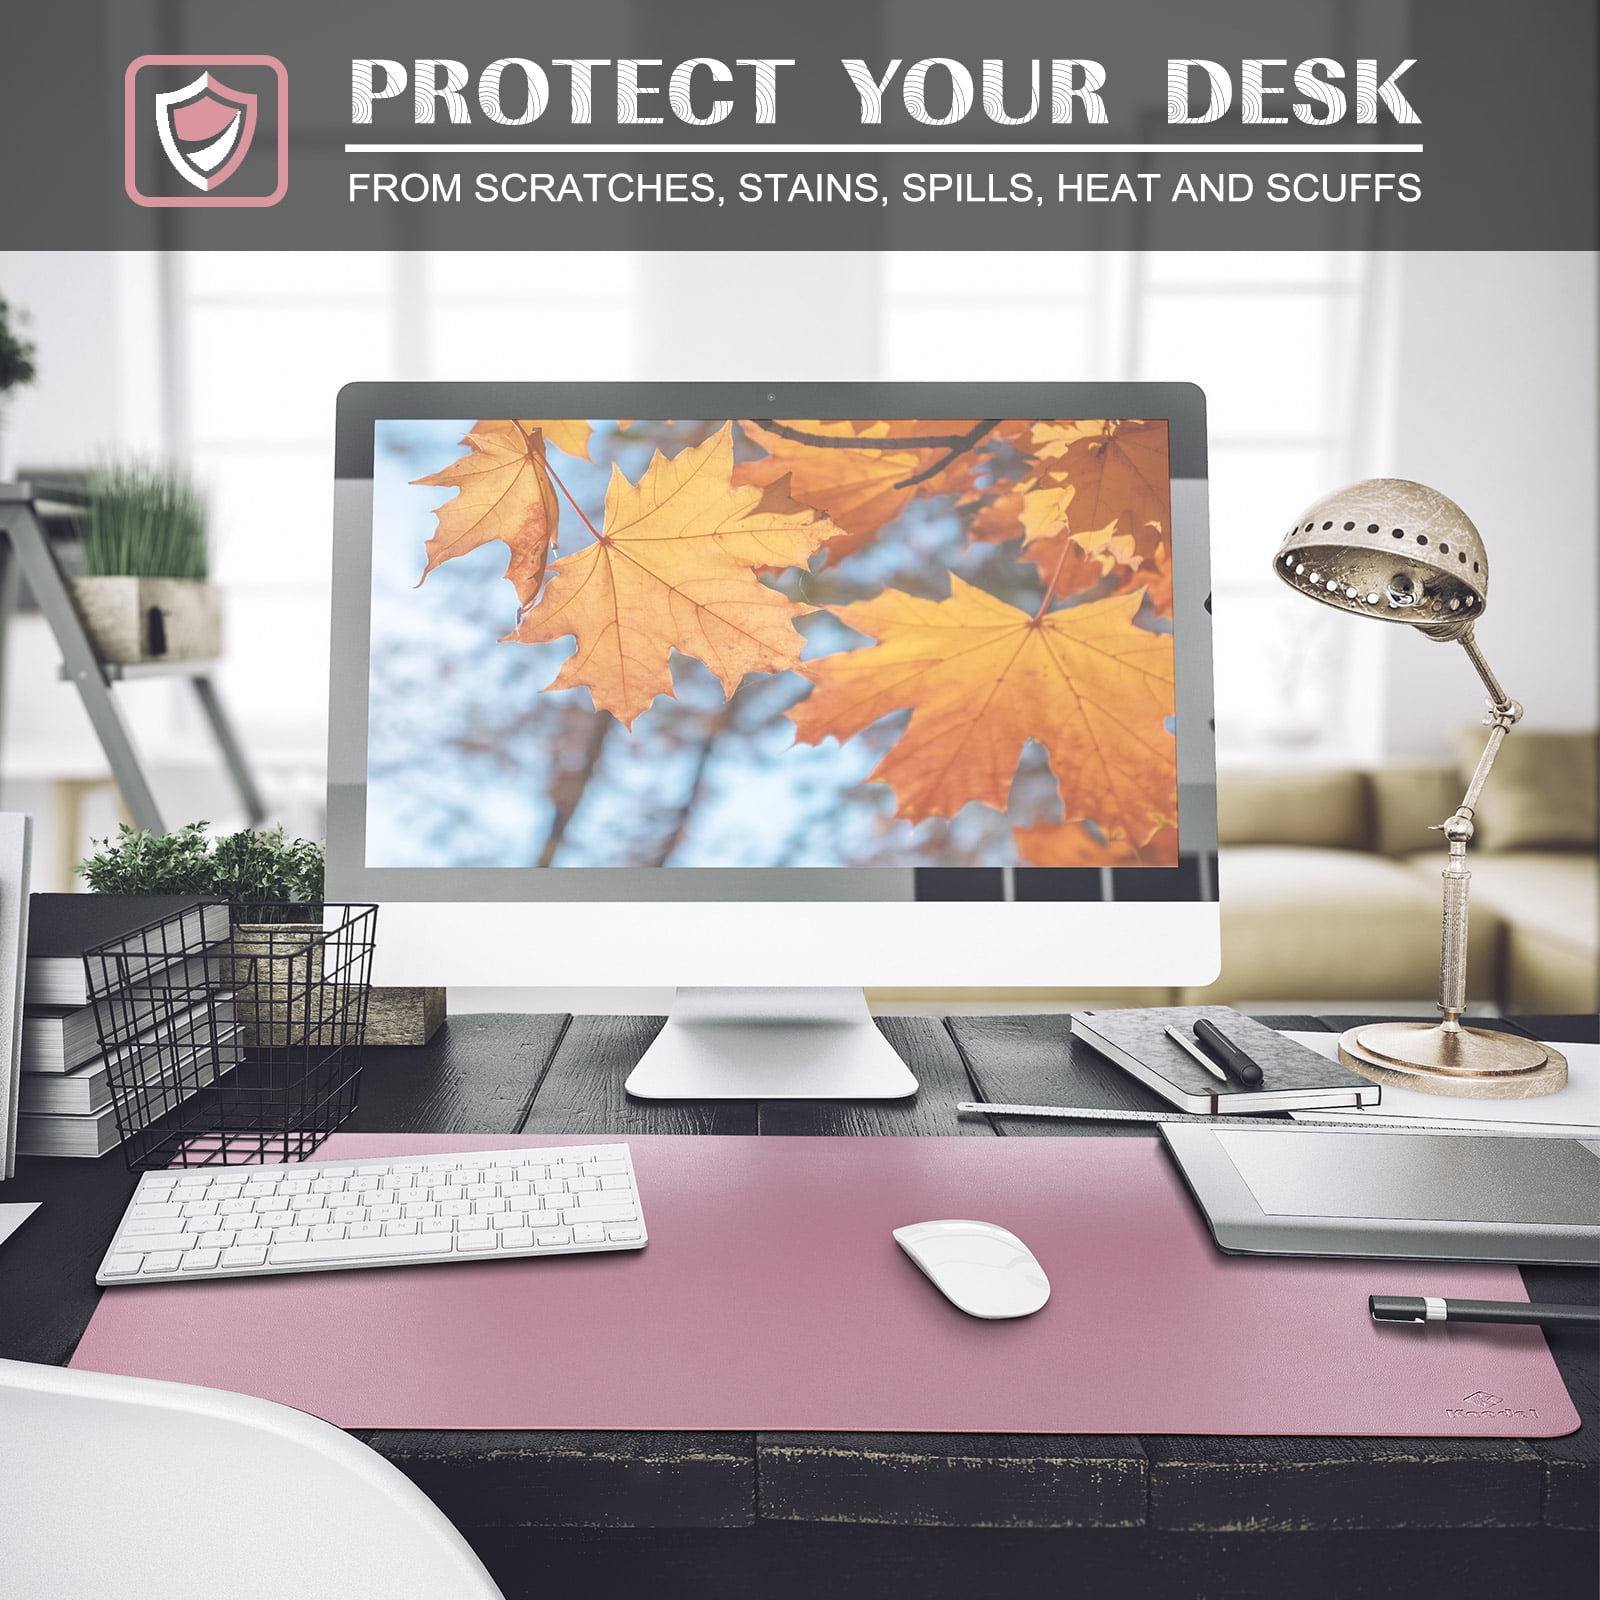 K KNODEL Desk Mat, Mouse Pad, Desk Pad, Waterproof Desk Mat for Desktop, Leather  Desk Pad for Keyboard and Mouse, Desk Pad Protector for Office and Home  (Light Green, 23.6 x 13.8) 